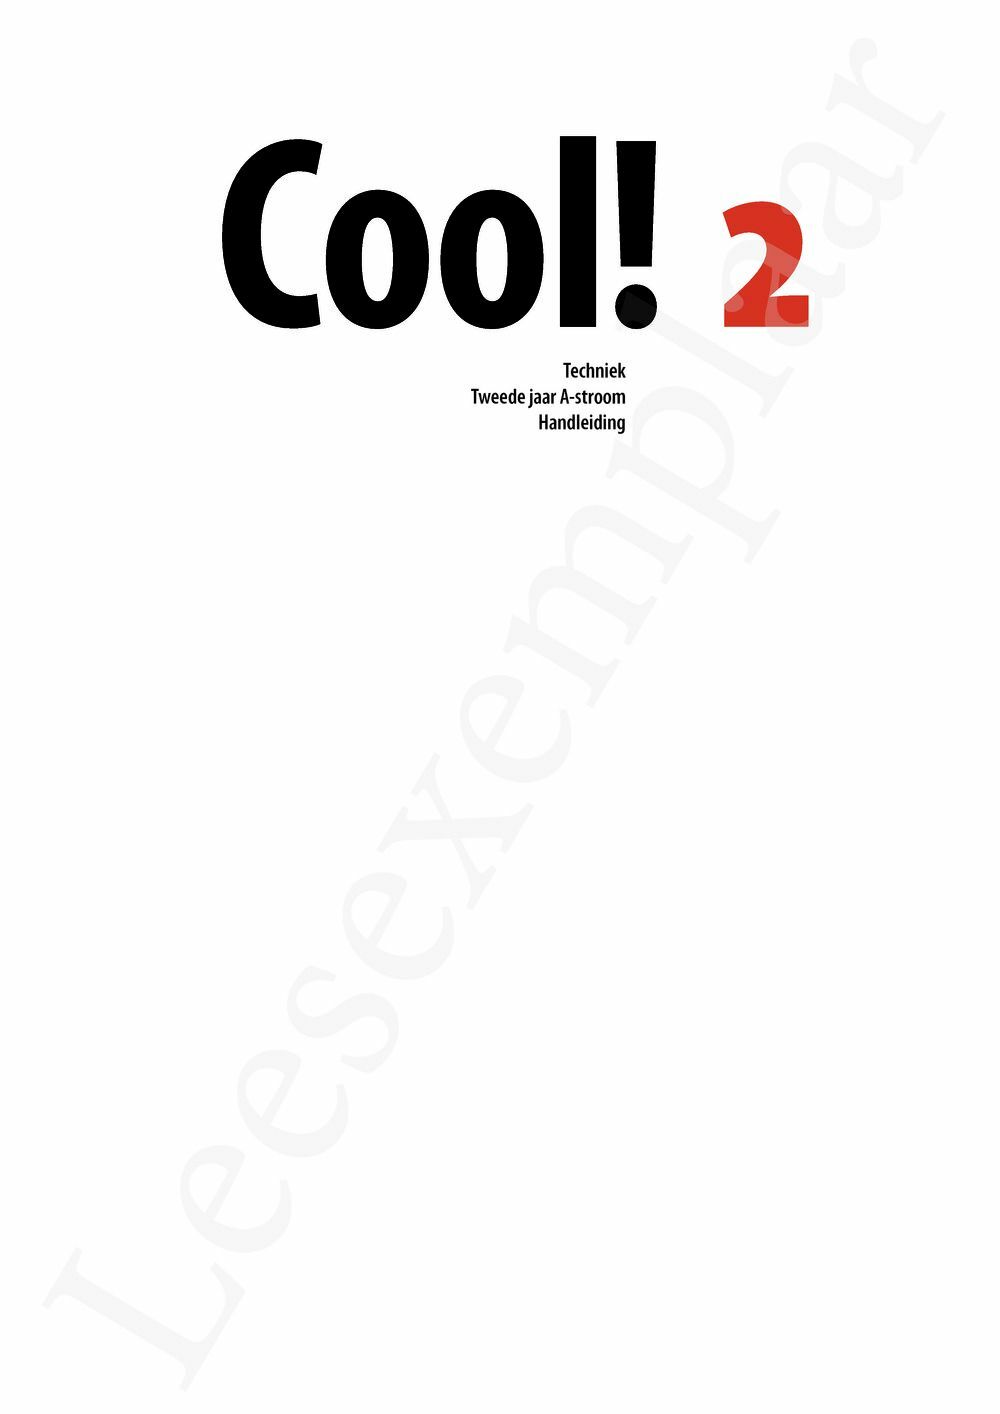 Preview: Cool! 2 Handleiding (incl. Pelckmans Portaal)